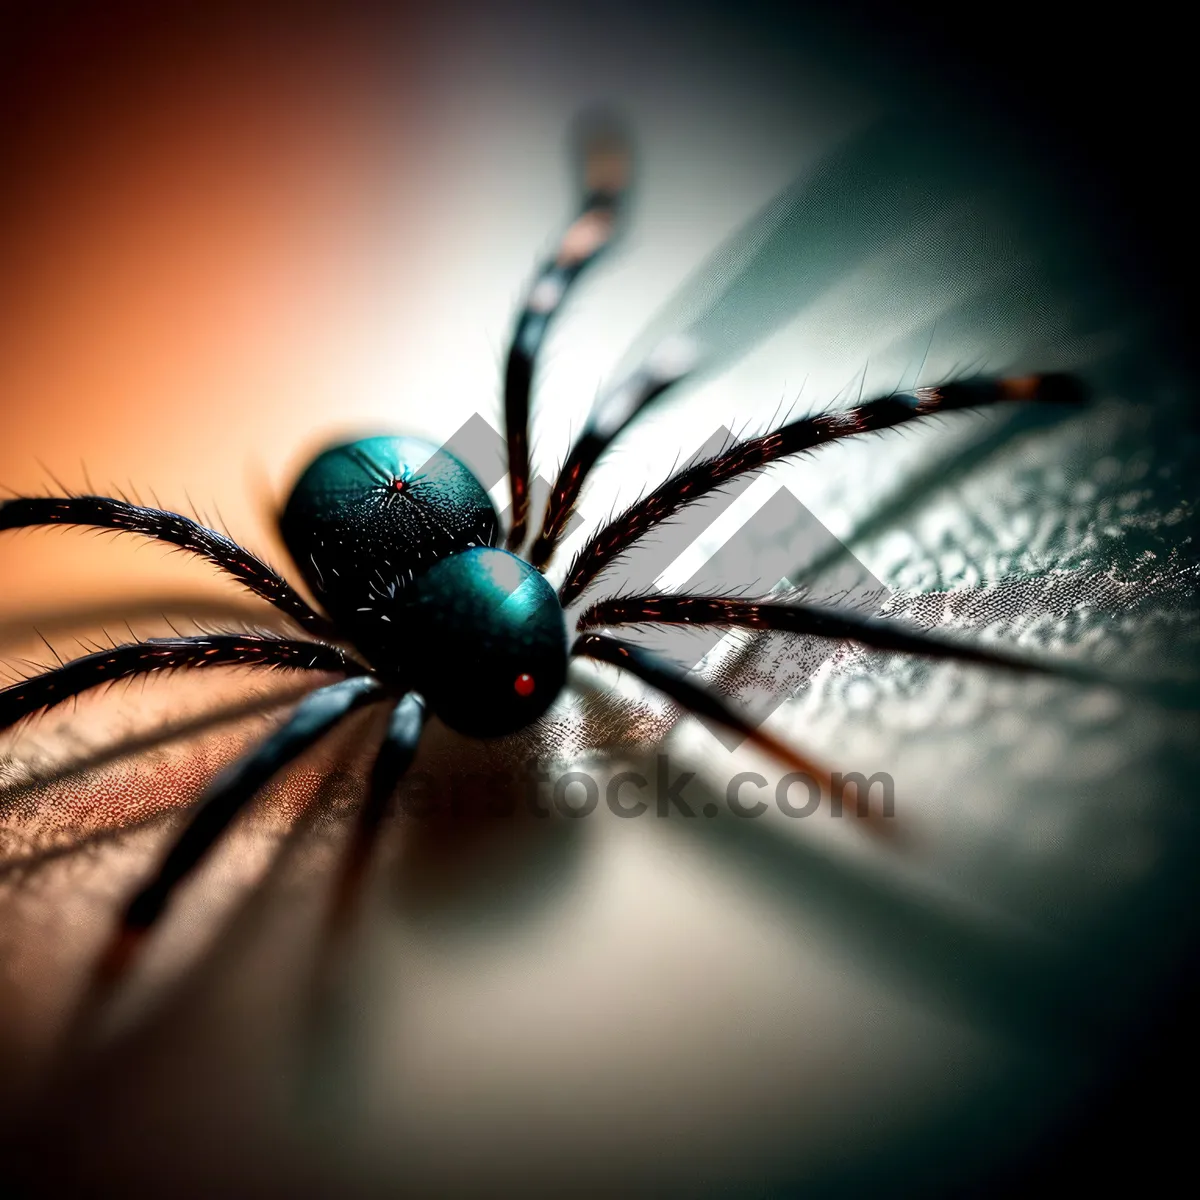 Picture of Black Widow Spider - Arachnid Queen of Darkness